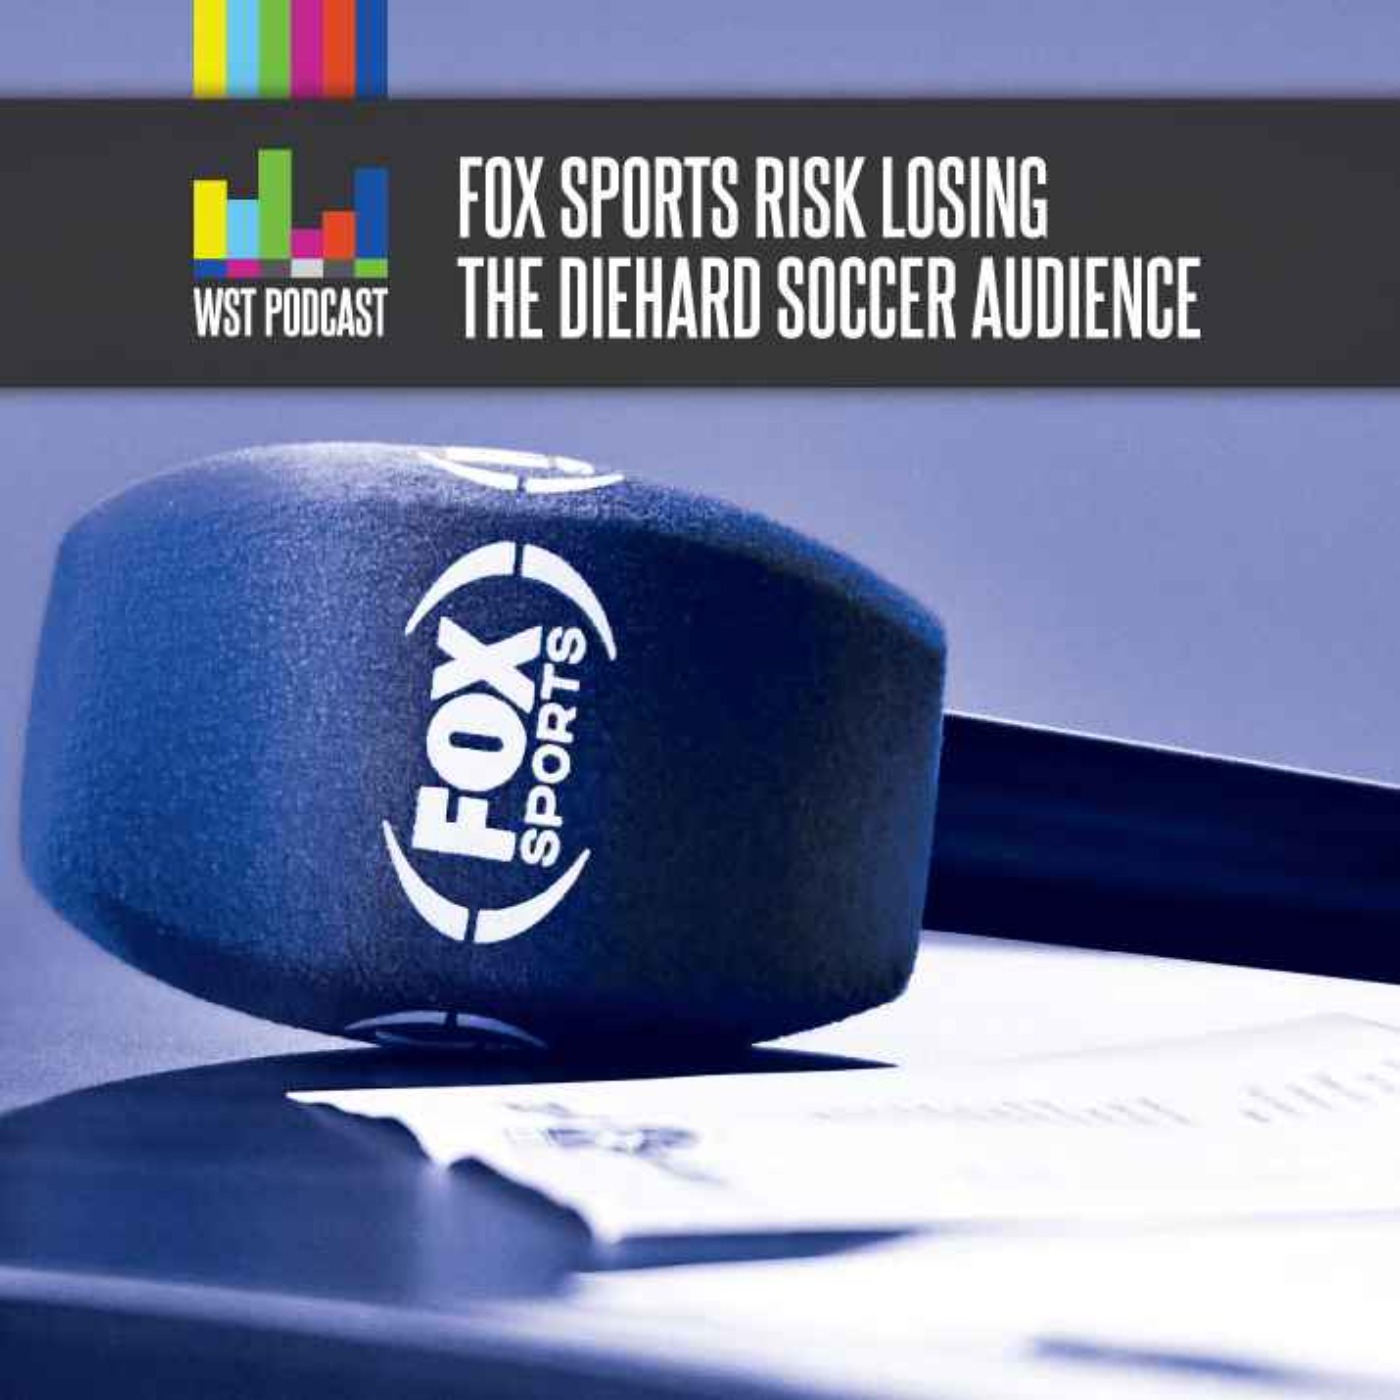 FOX Sports risk losing diehard soccer audience